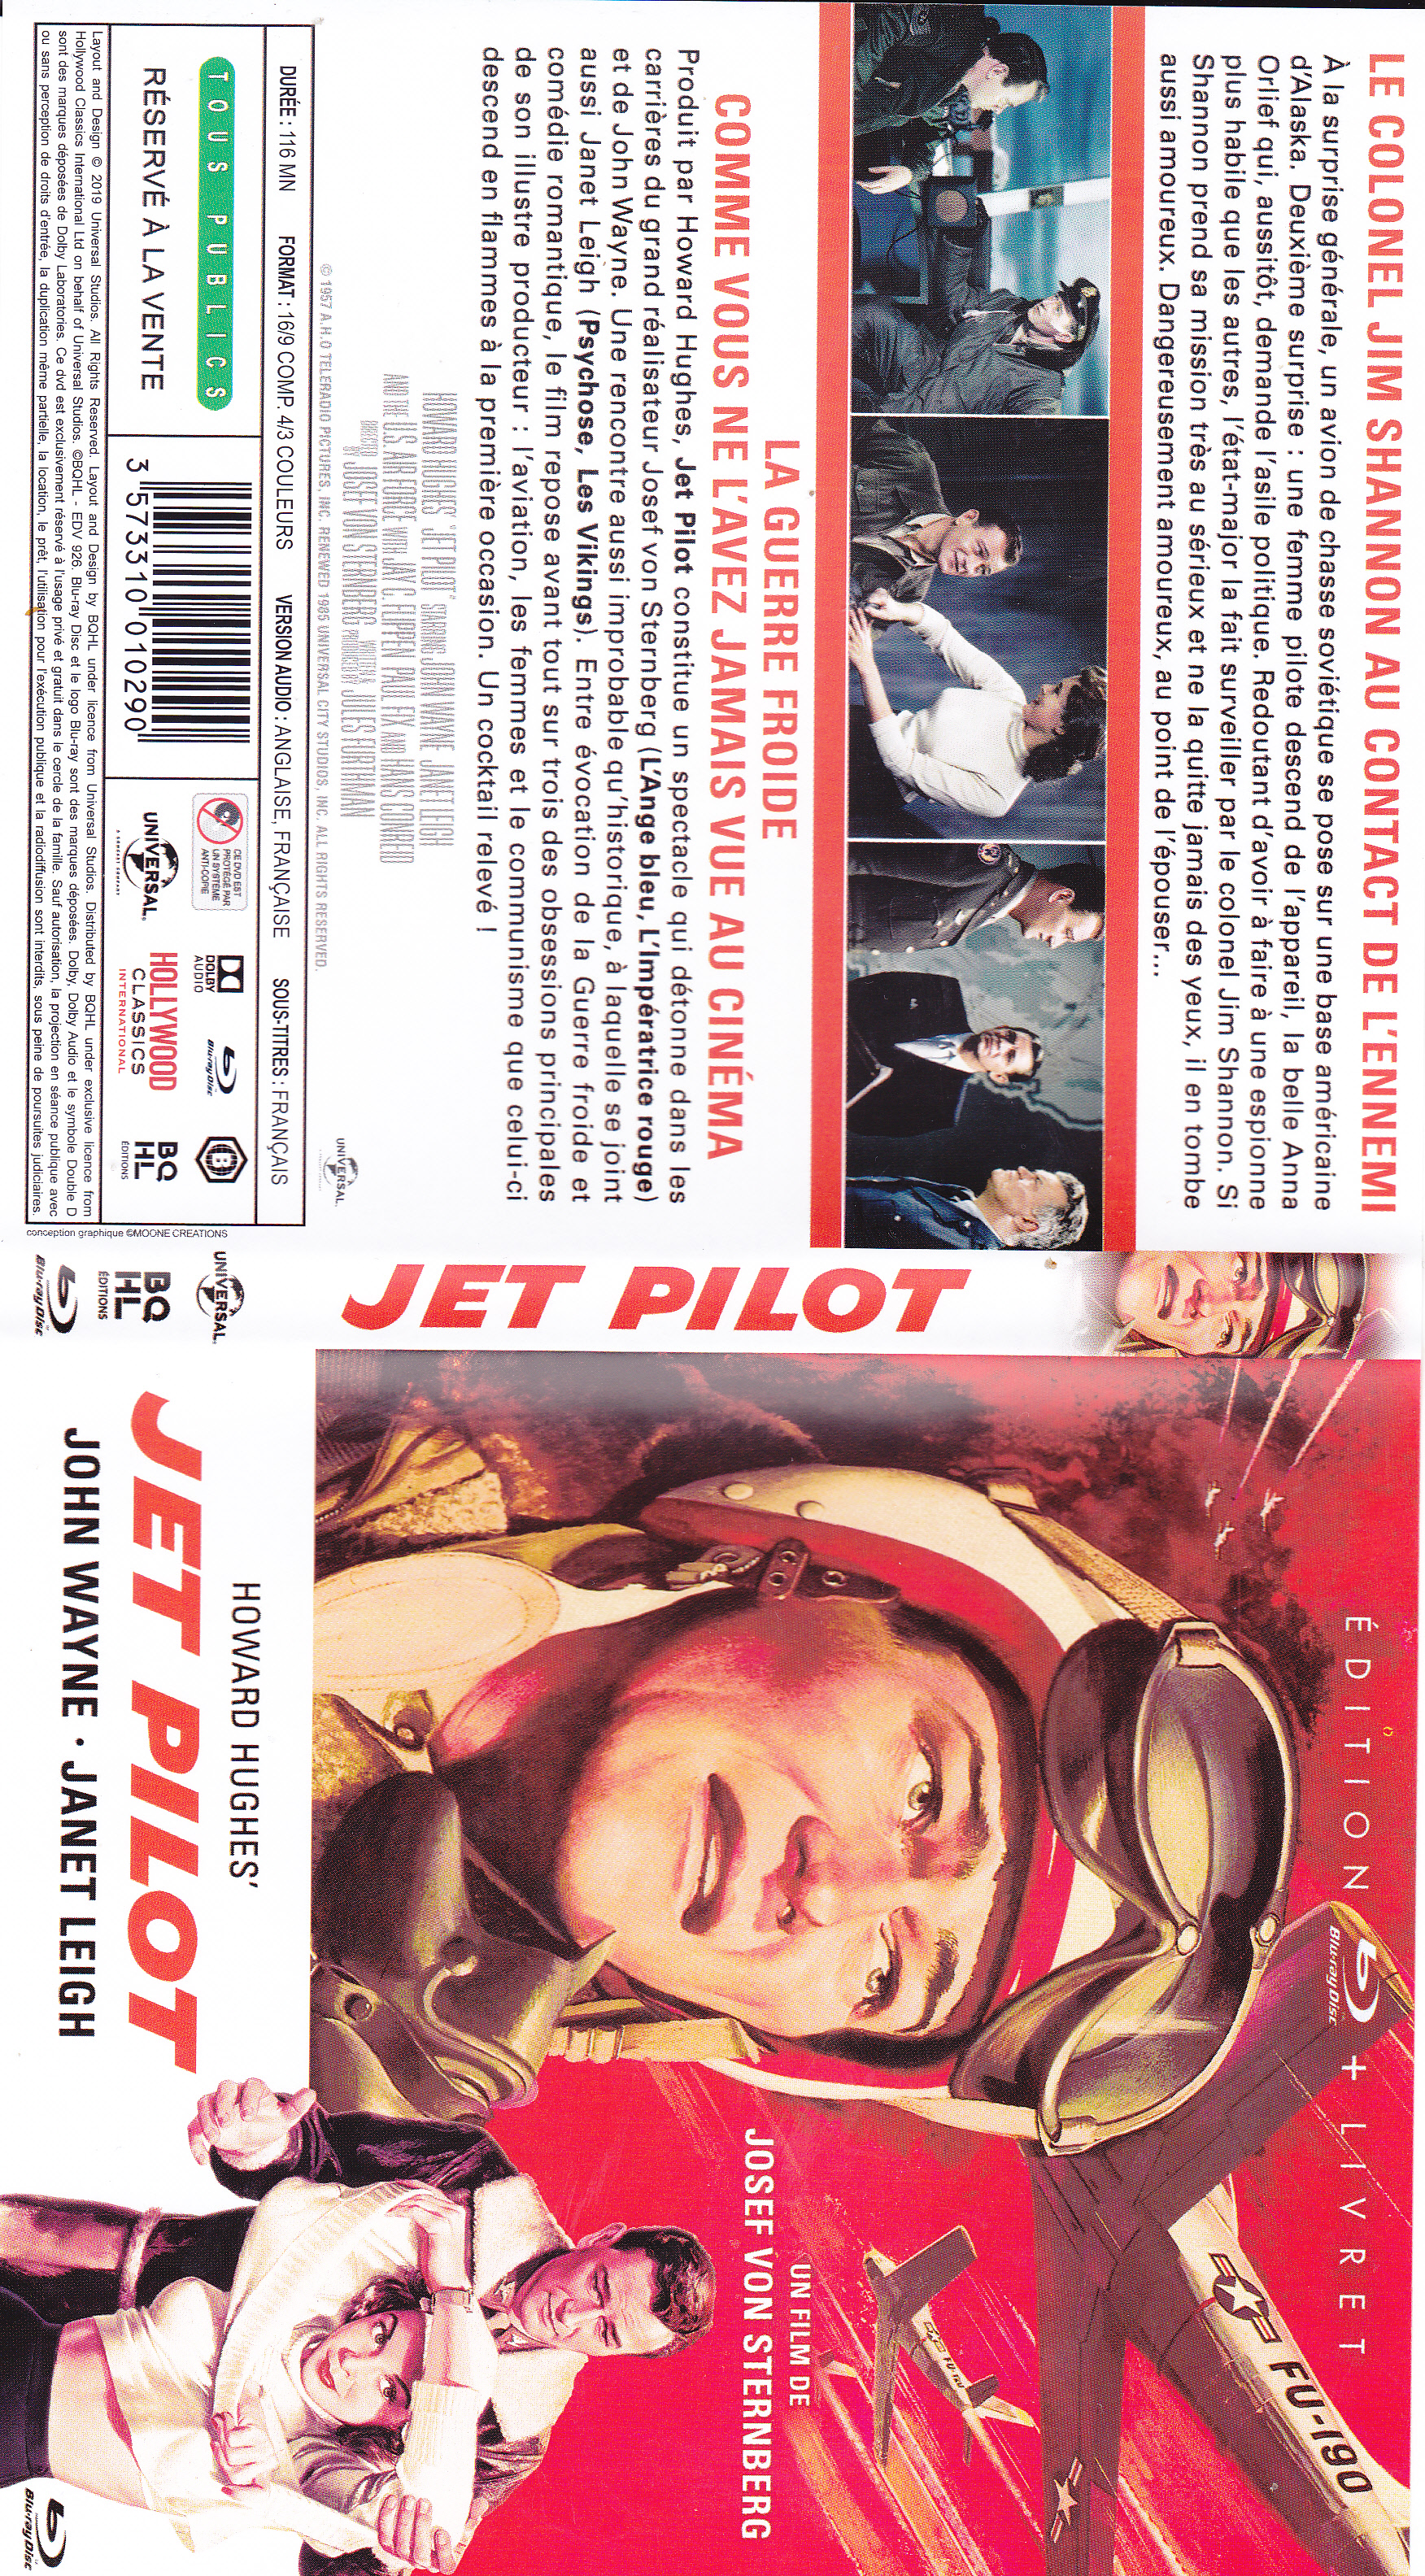 Jaquette DVD Jet pilot (BLU-RAY)